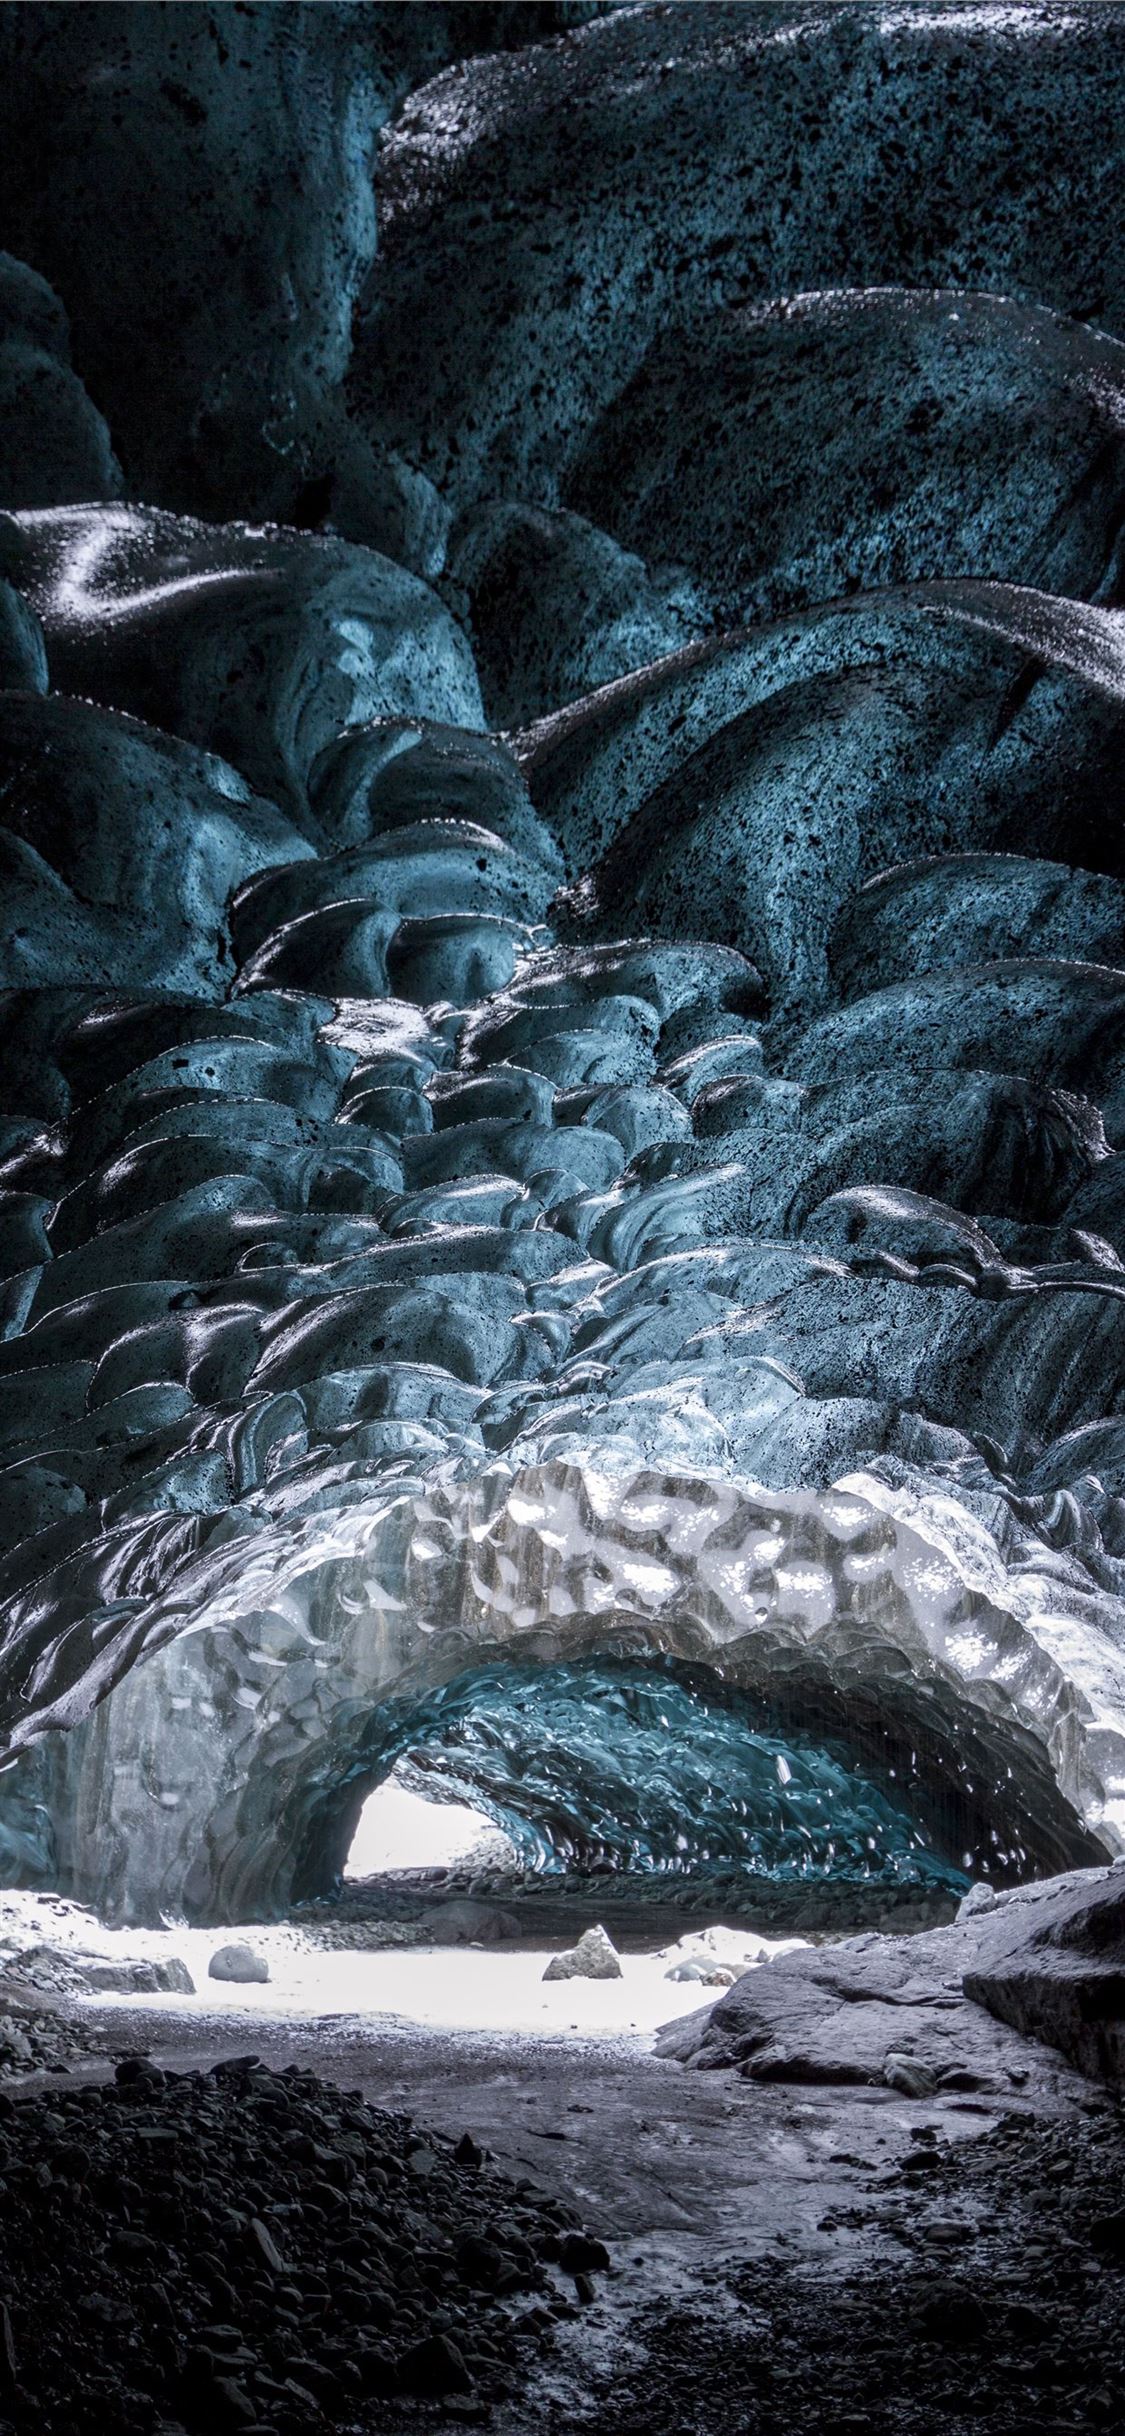 Vatnajokull Ice Caves iPhone X Wallpaper Free Download